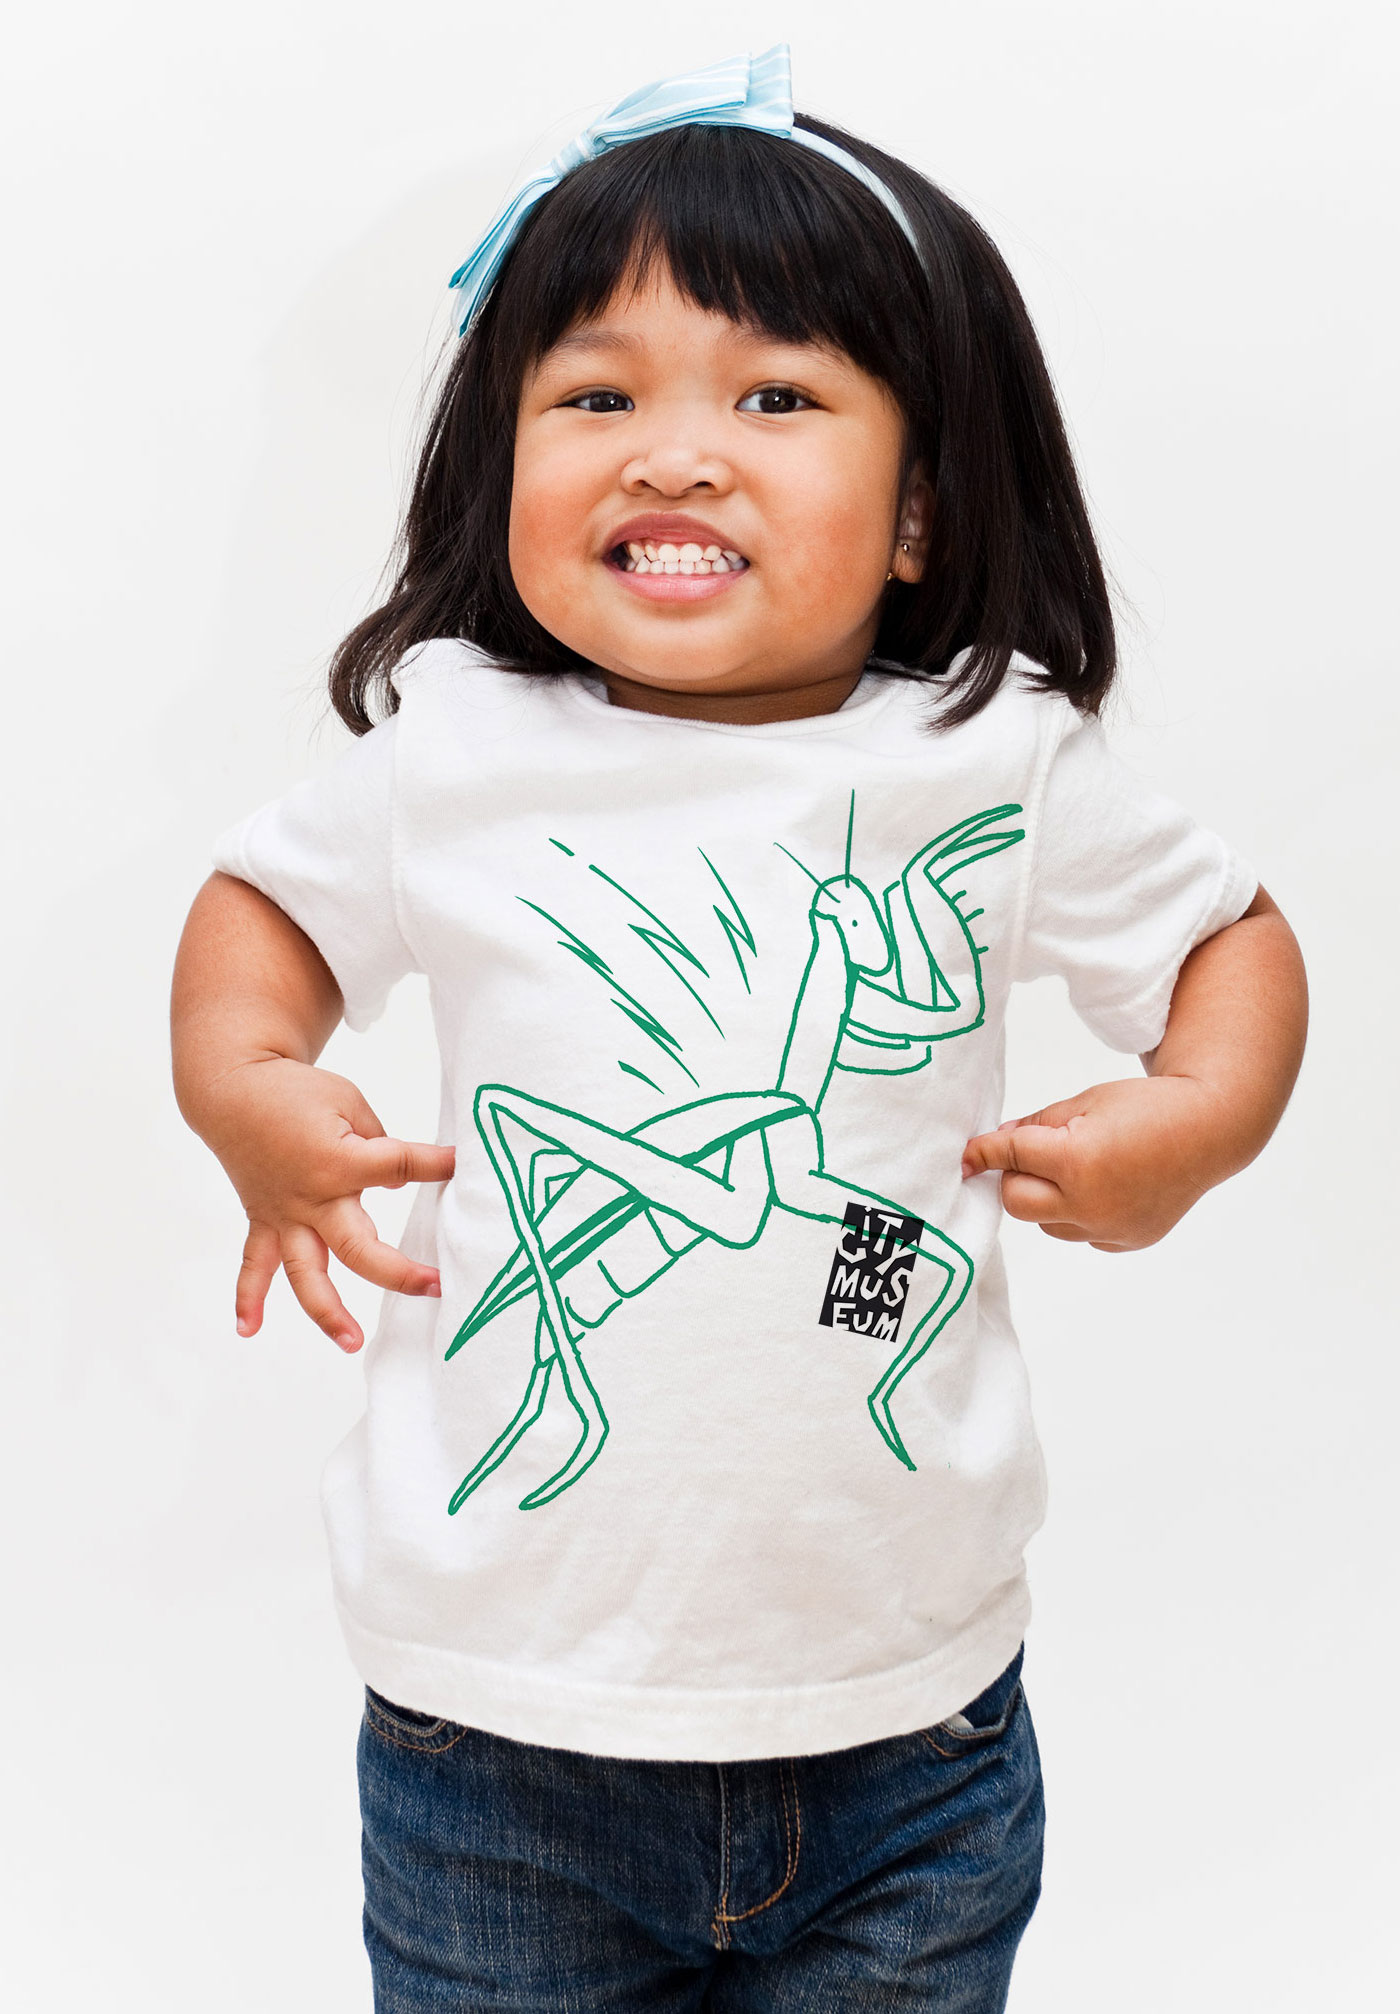 A little girl wears a t-shirt with City Museum's new branding